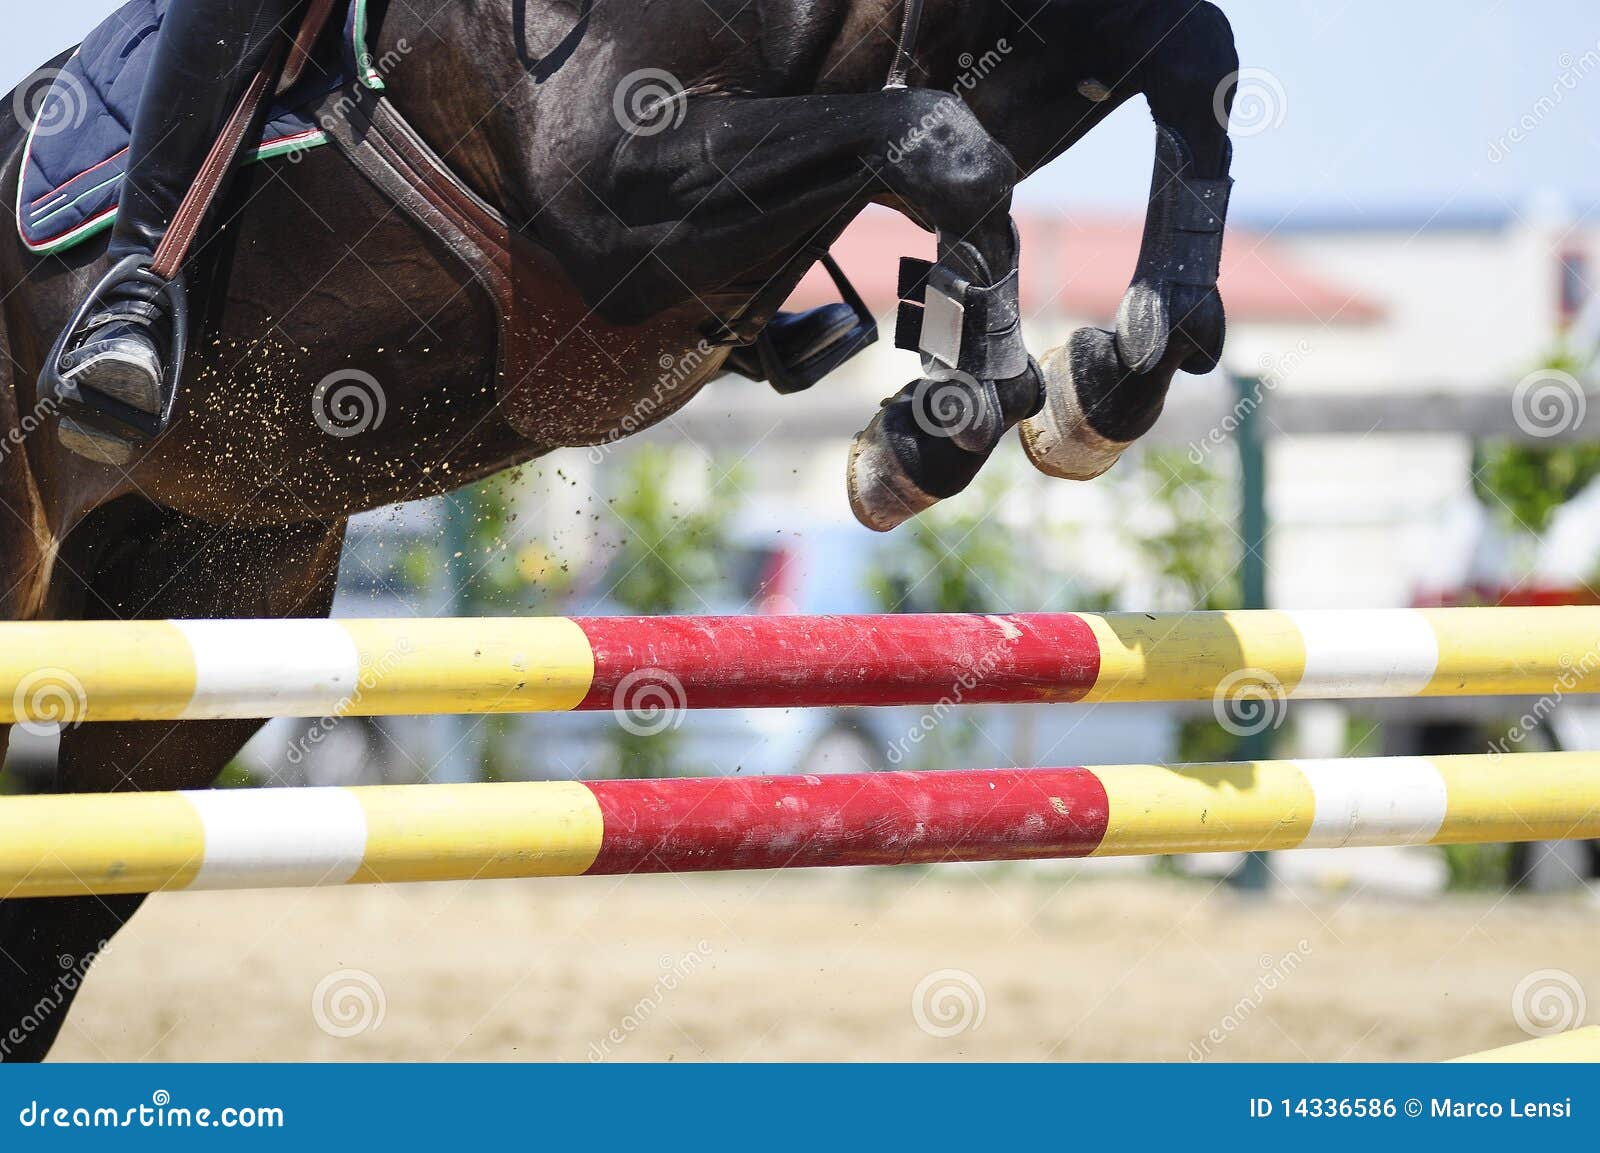 jumping horse